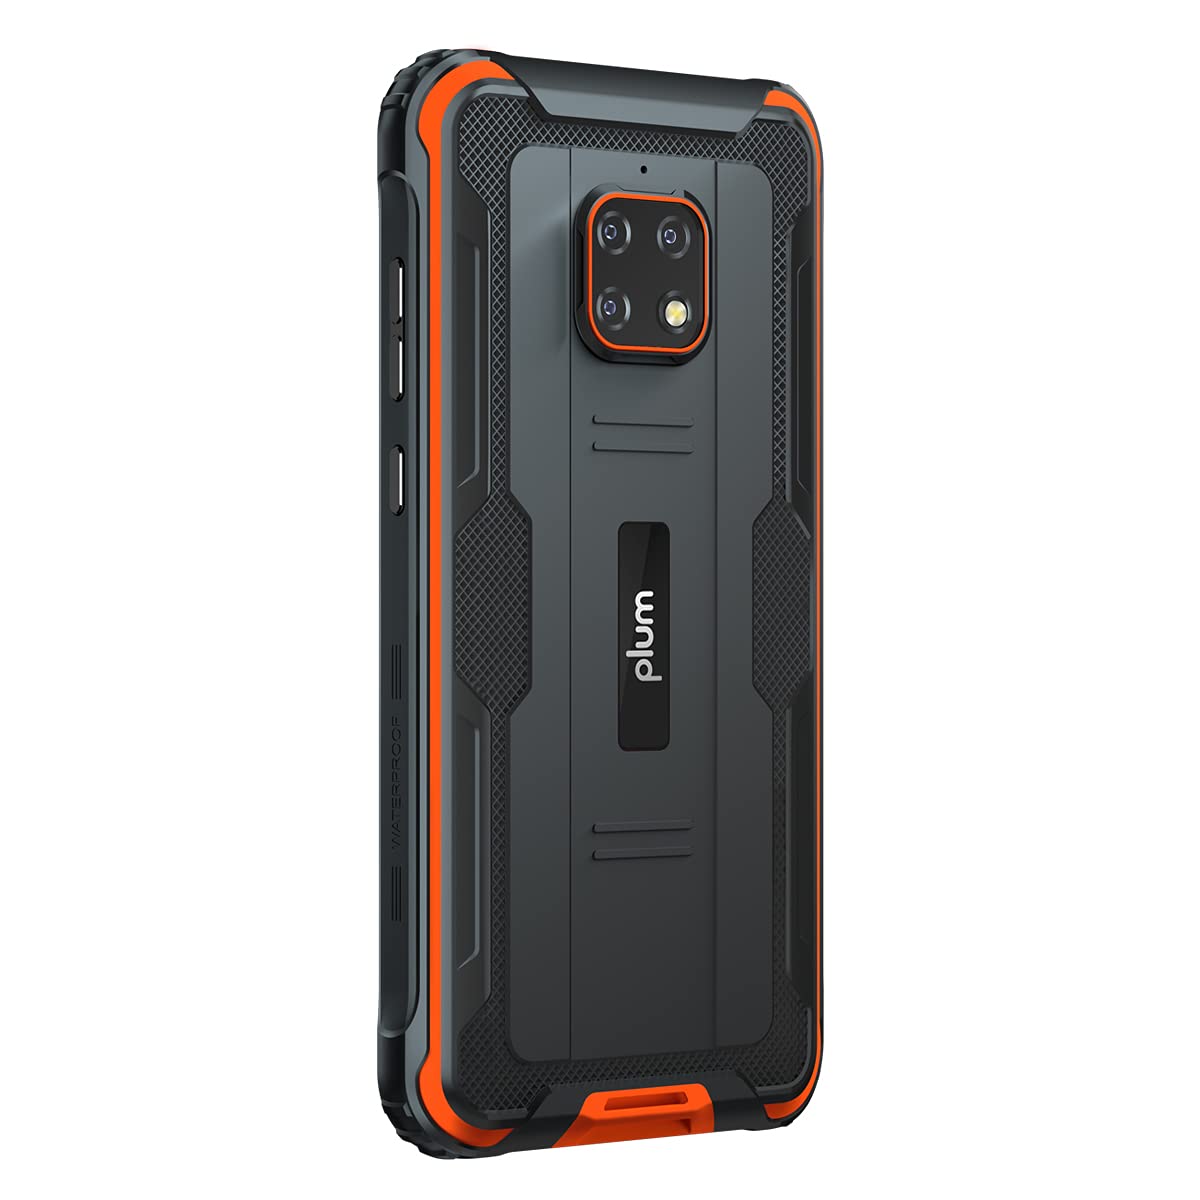 Plum Gator 7 4G Volte Unlocked Rugged Smart Phone Military Grade IP69 Water Shock Proof 5580 mAh Battery - Orange